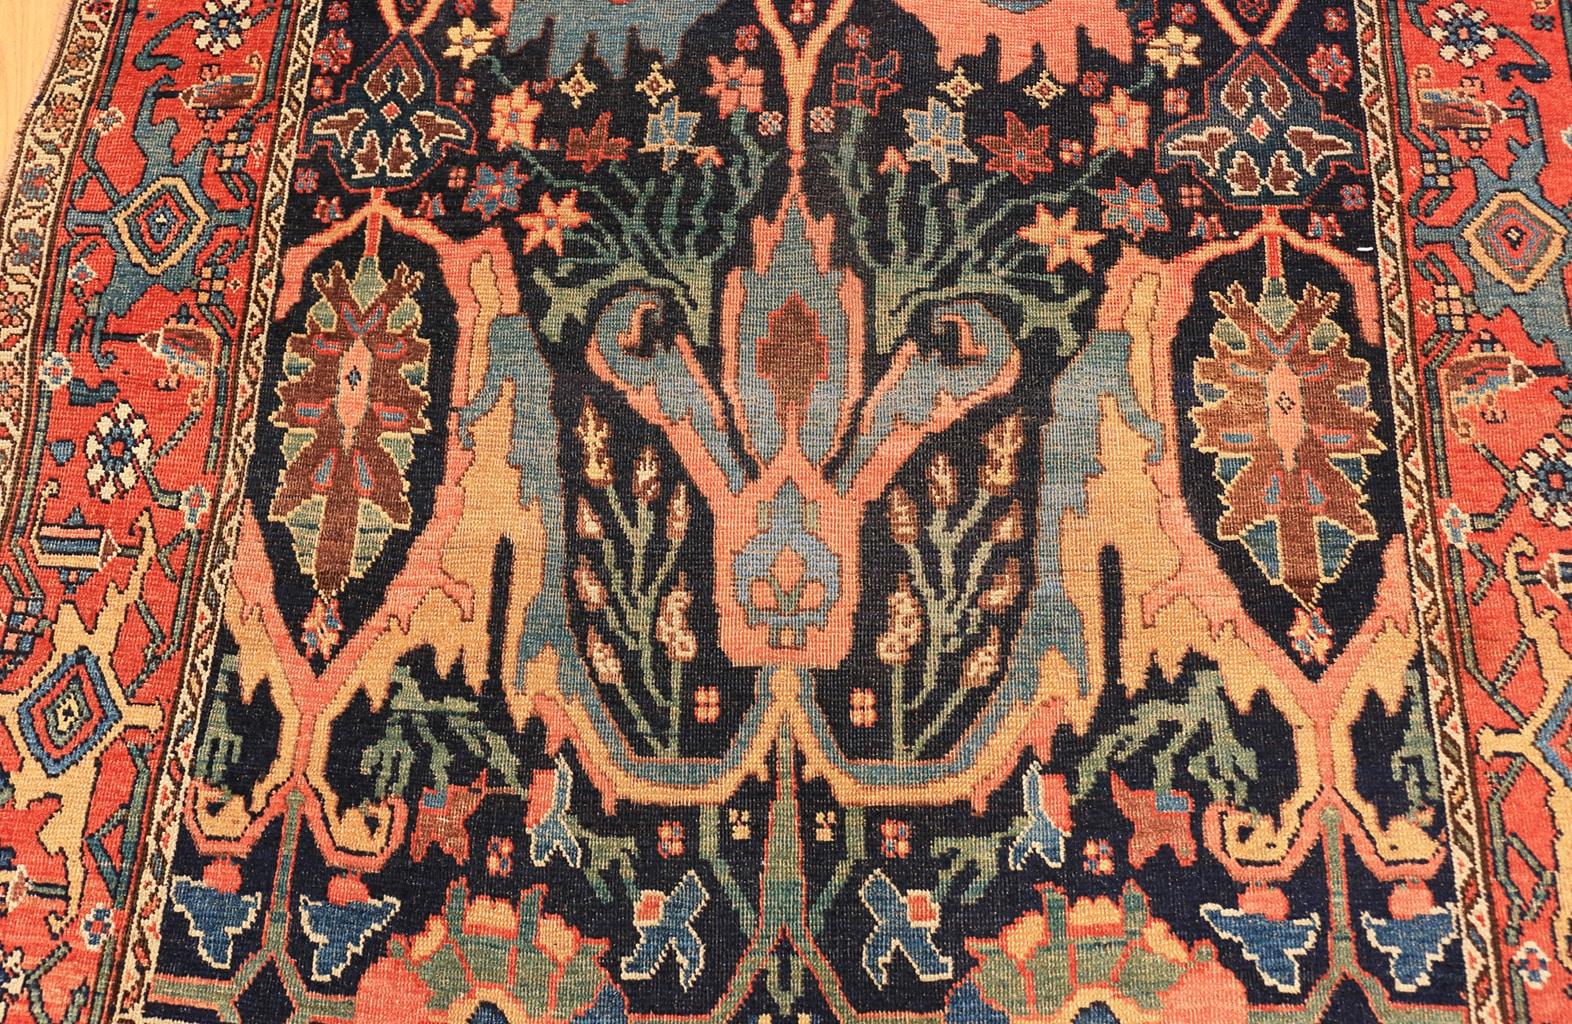 Hand-Knotted Beautiful Antique Blue Background Persian Bidjar Carpet. Size: 5' 2